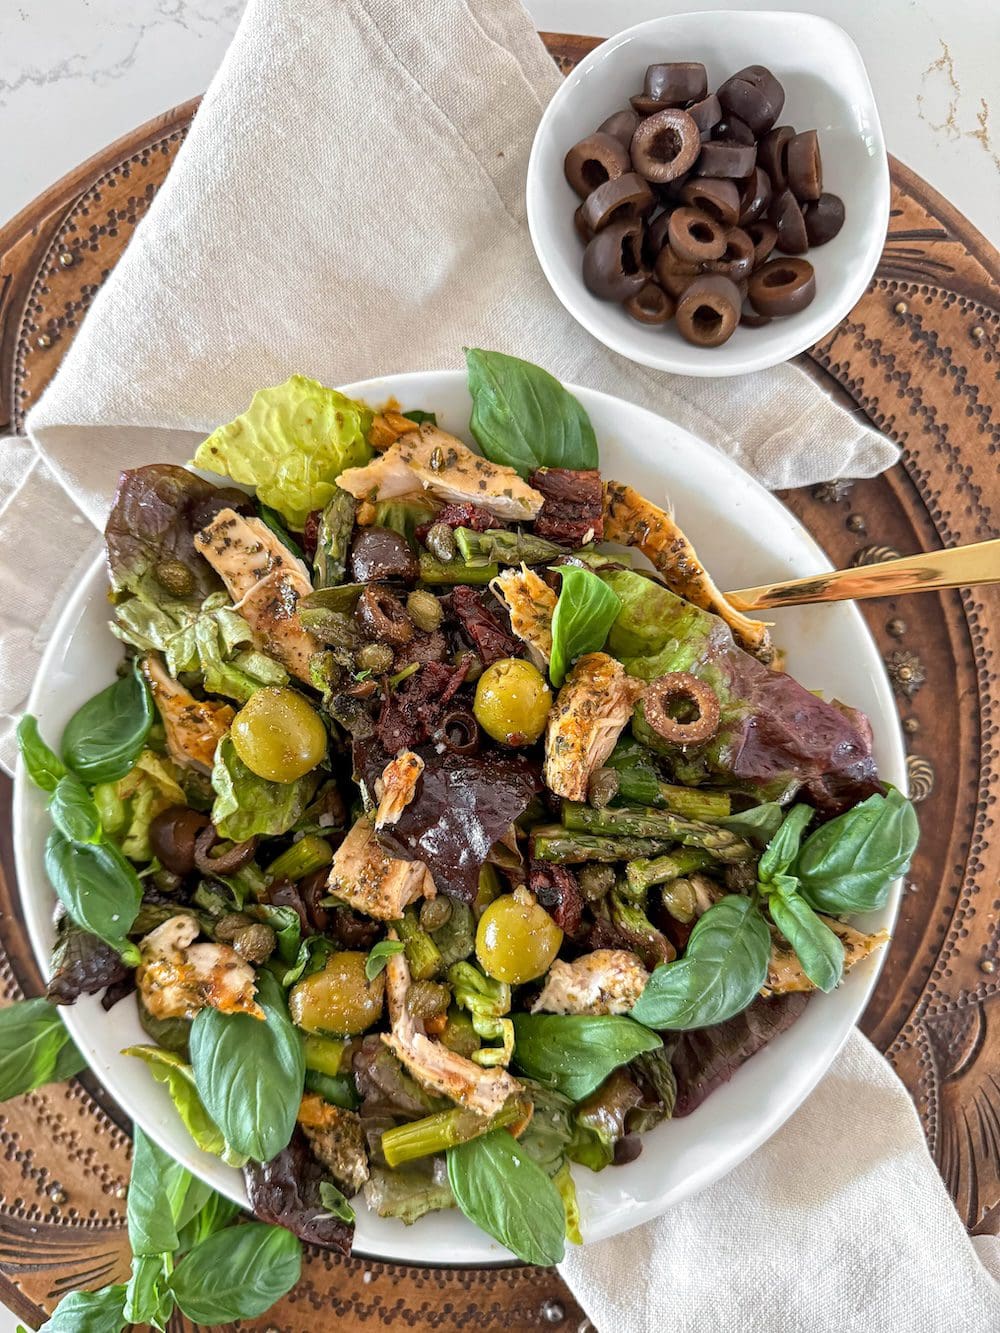 A Mediterranean salad next to a bowl of black olives.